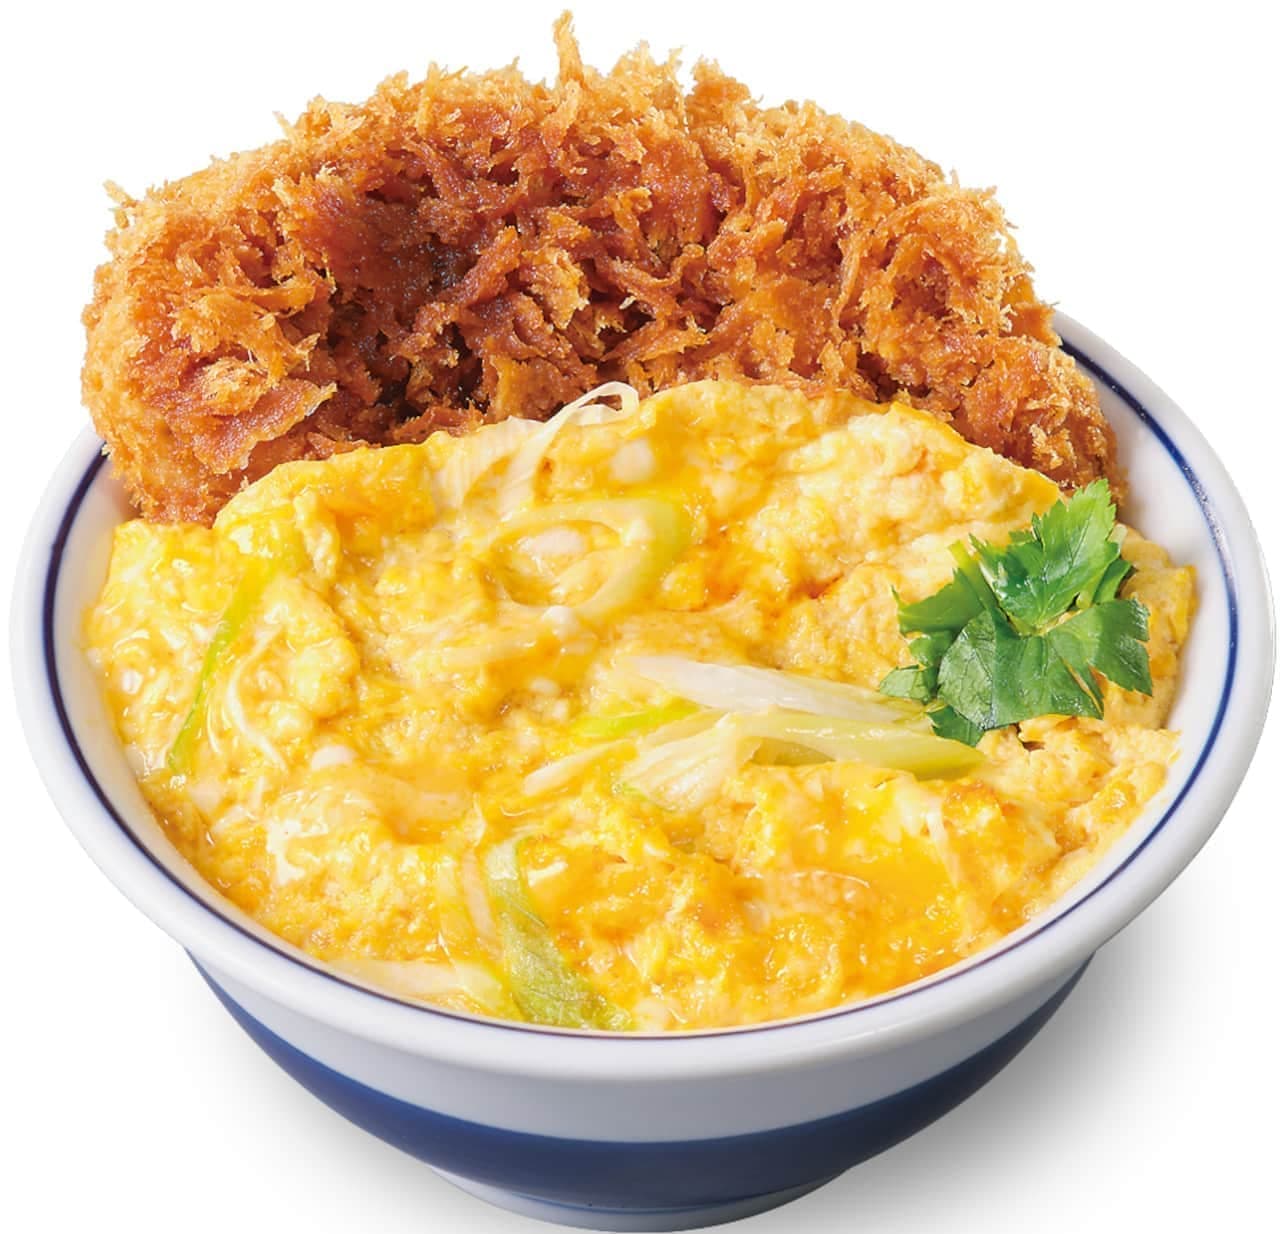 Katsuya "Fluffy egg white pork cutlet served on top of a bowl of rice (ume)